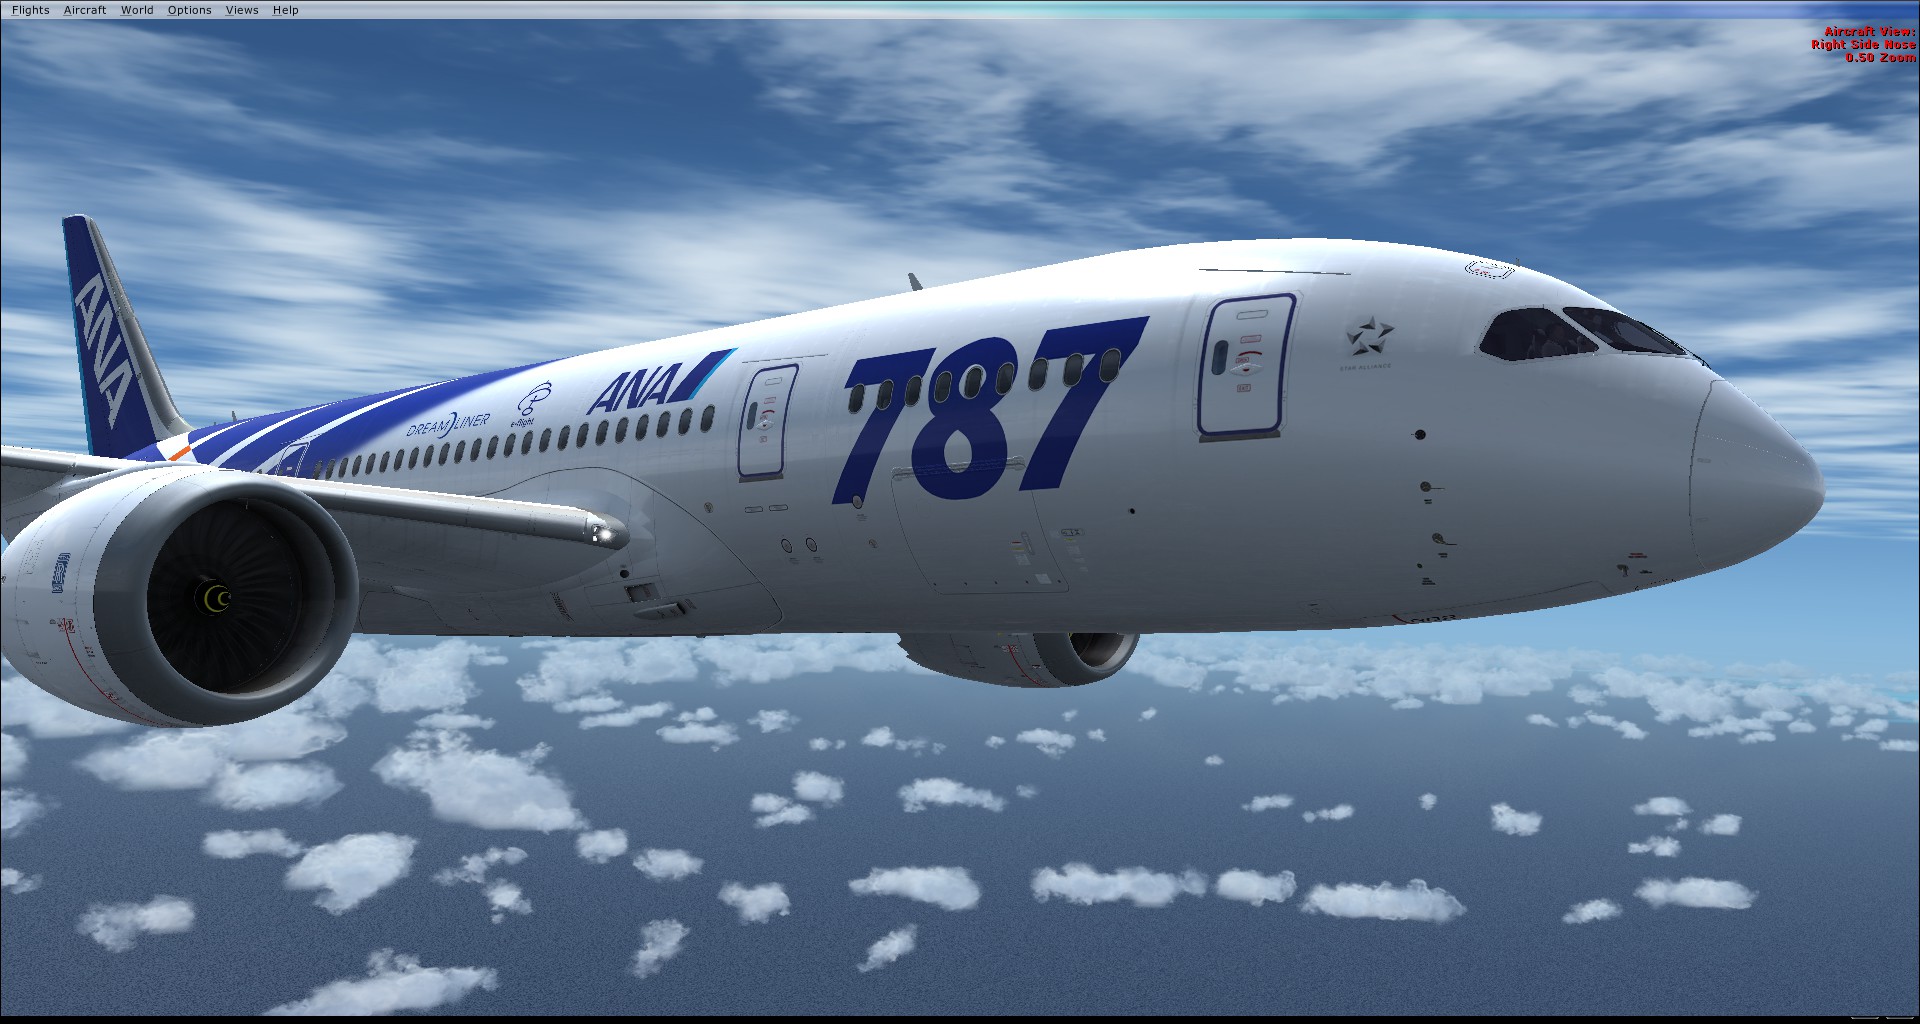 Quality Wings 787 ANA鯖-6712 